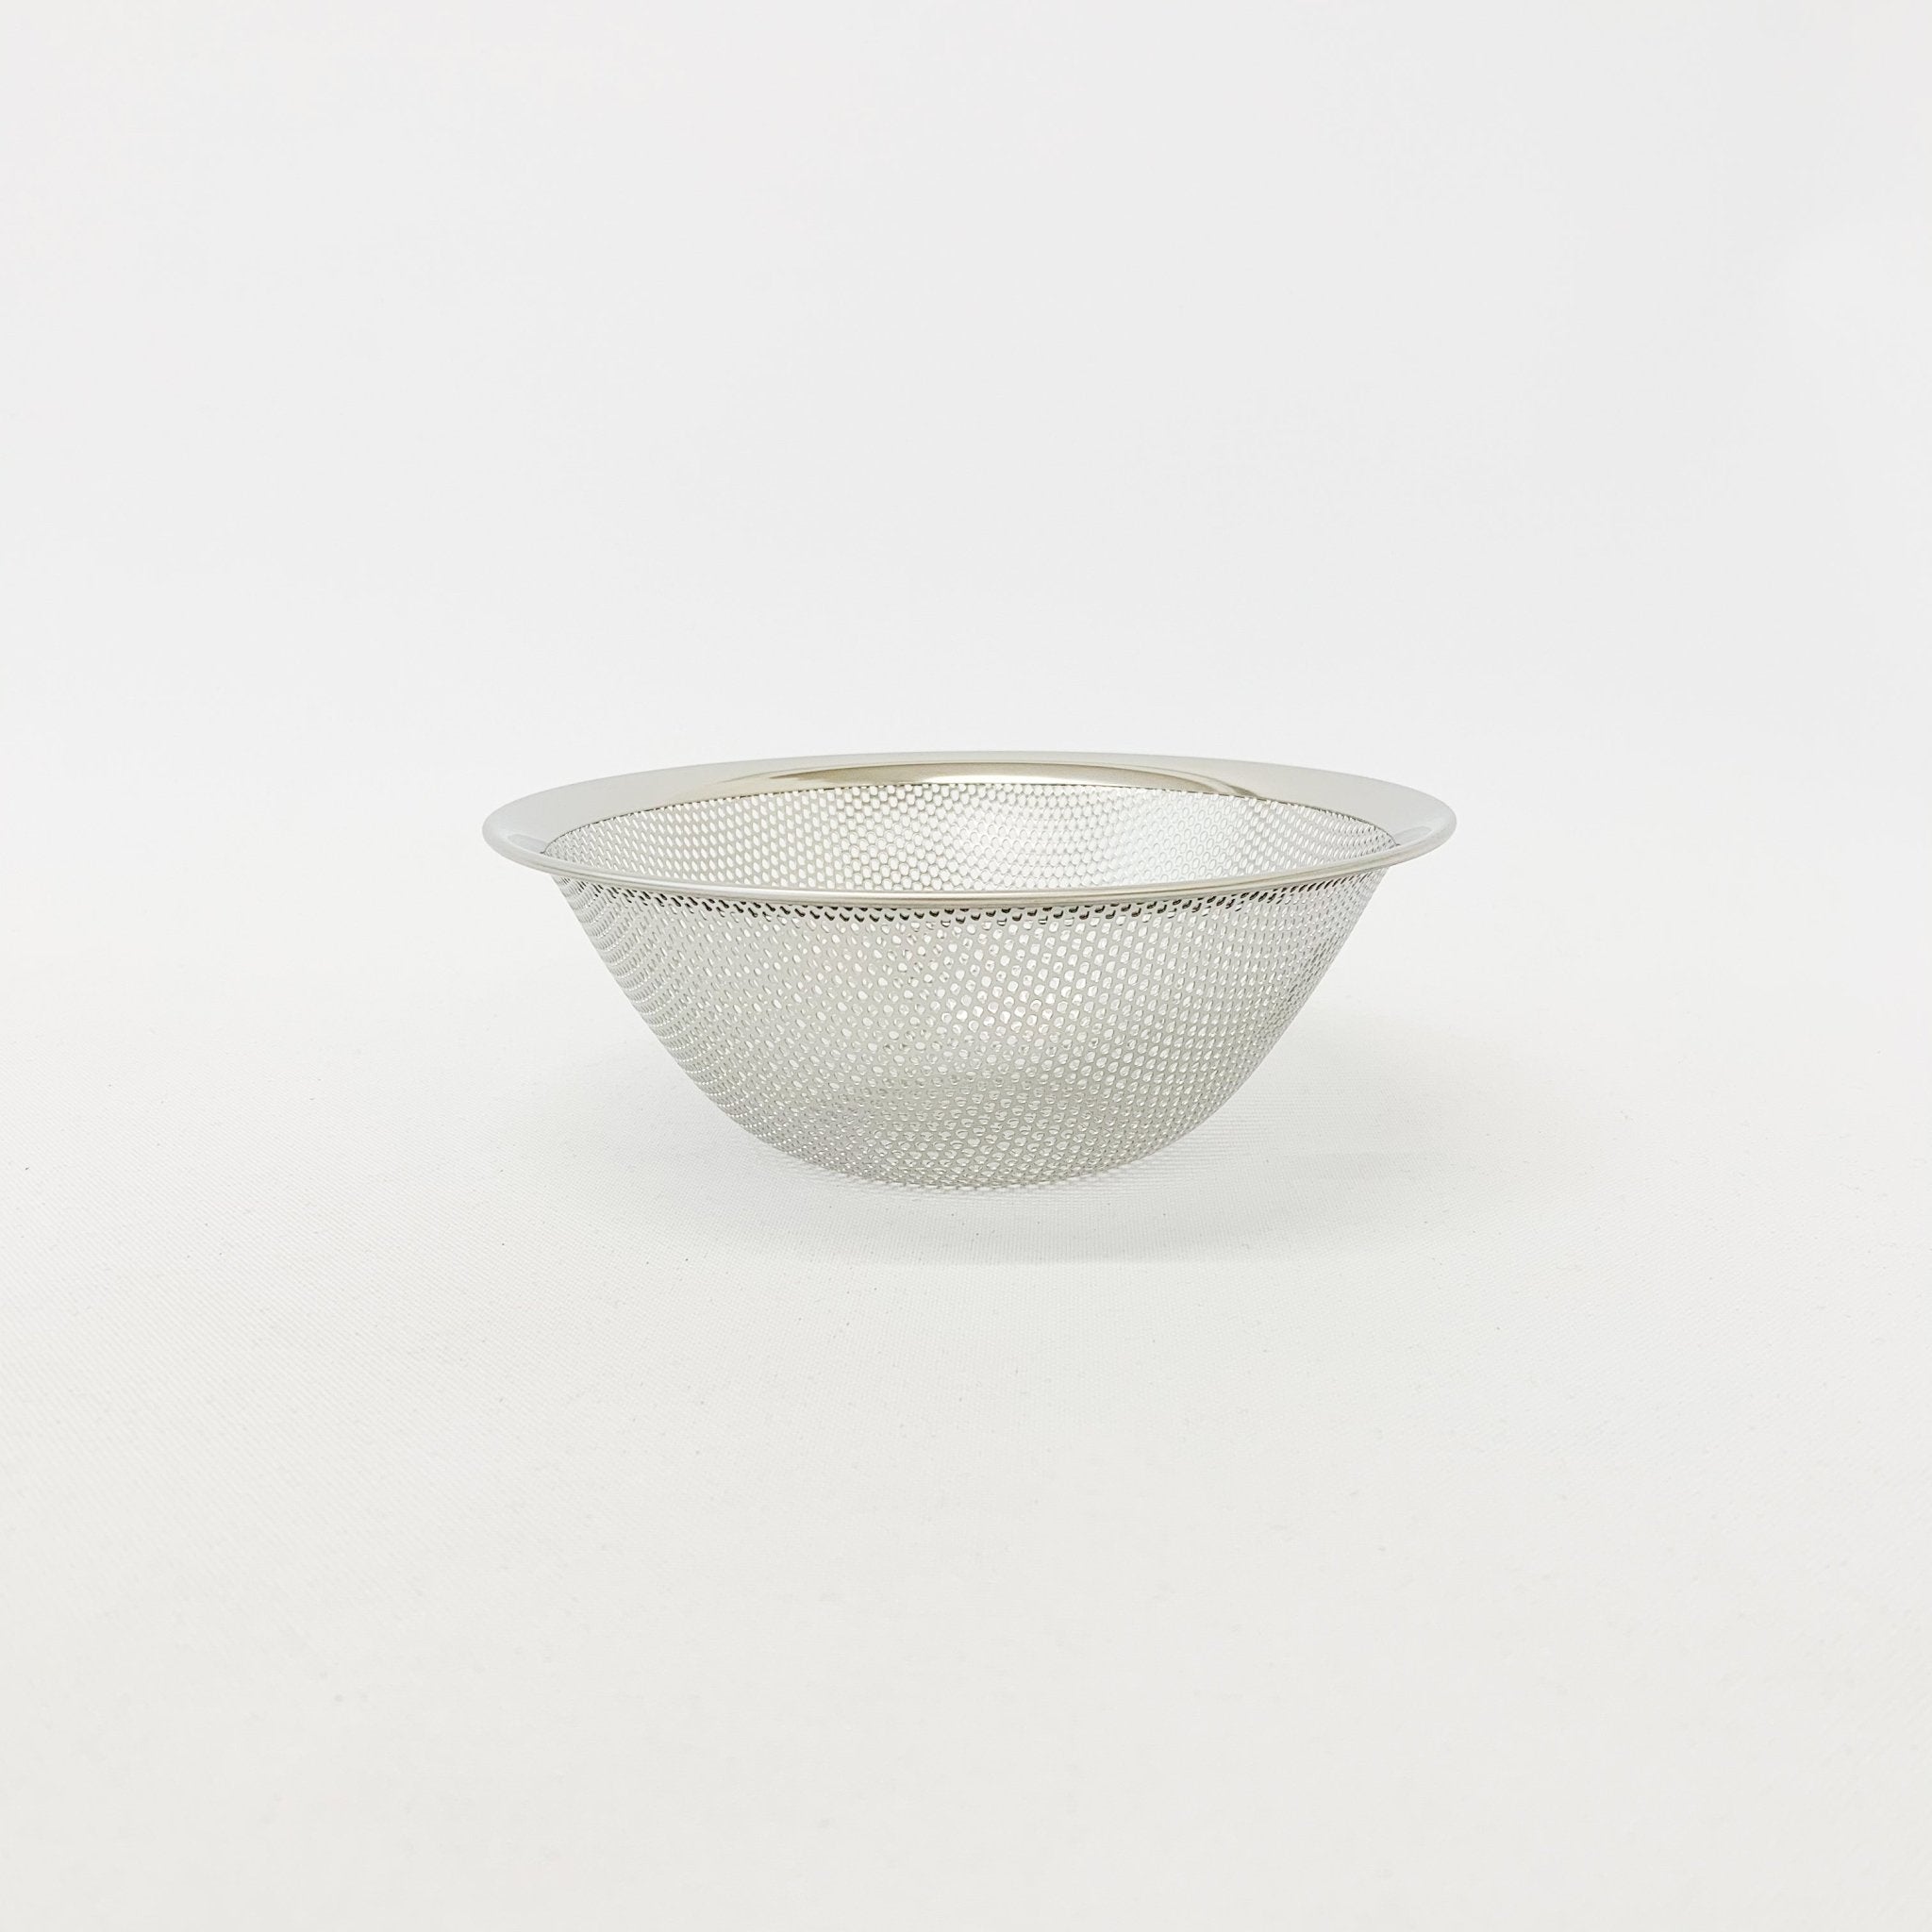 Large Stainless Steel Mixing Bowl by Sori Yanagi – TENZO